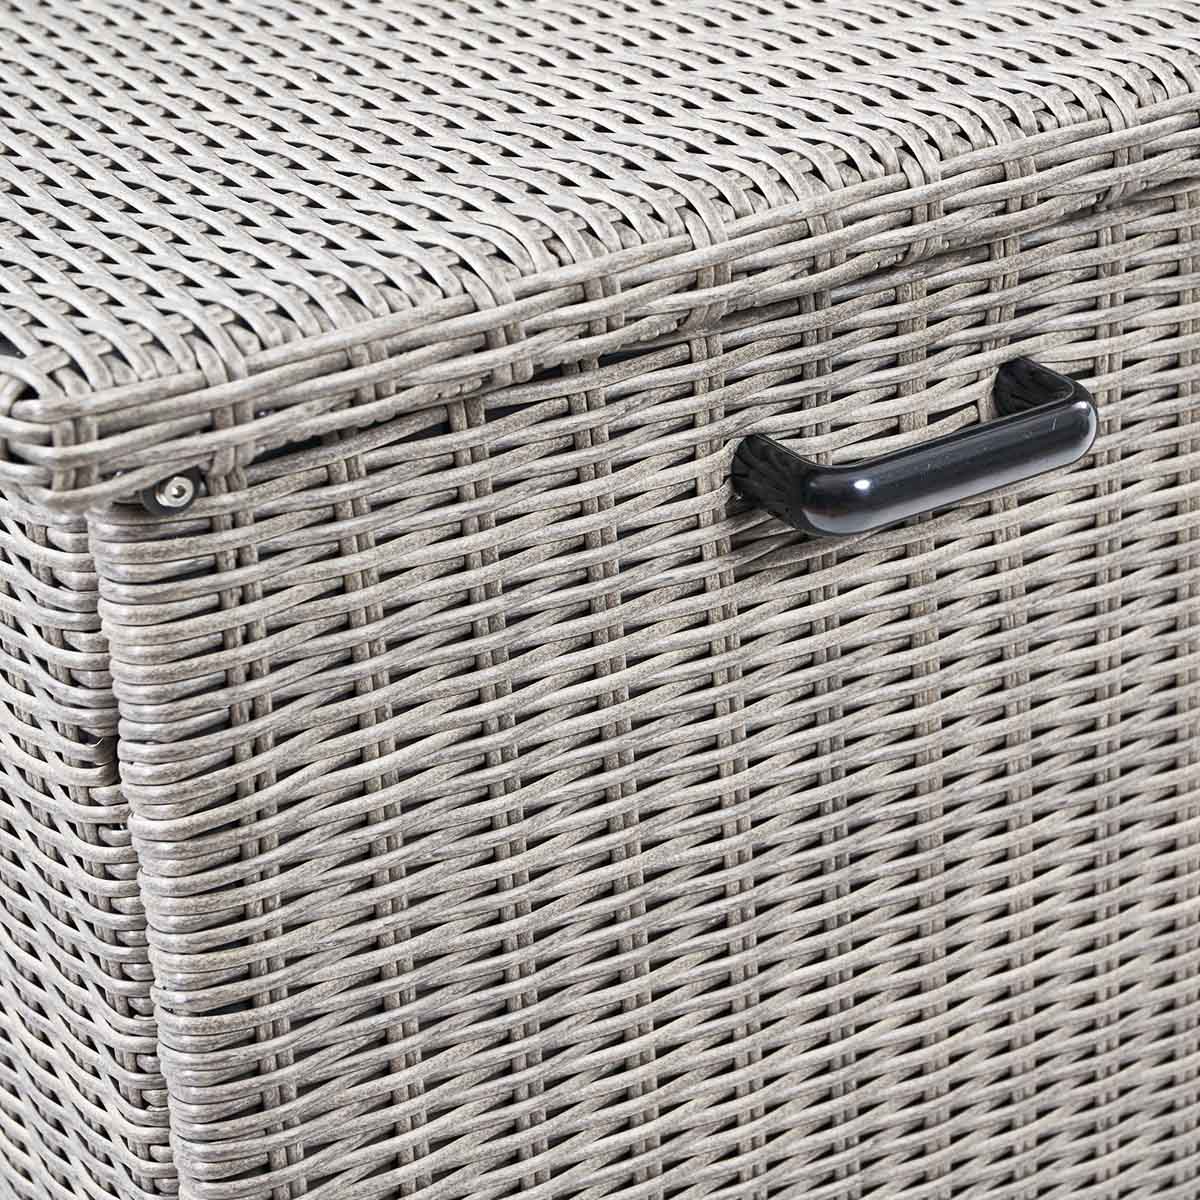 Large Slate Grey Rattan Effect Garden Cushion Storage Box – Click Style